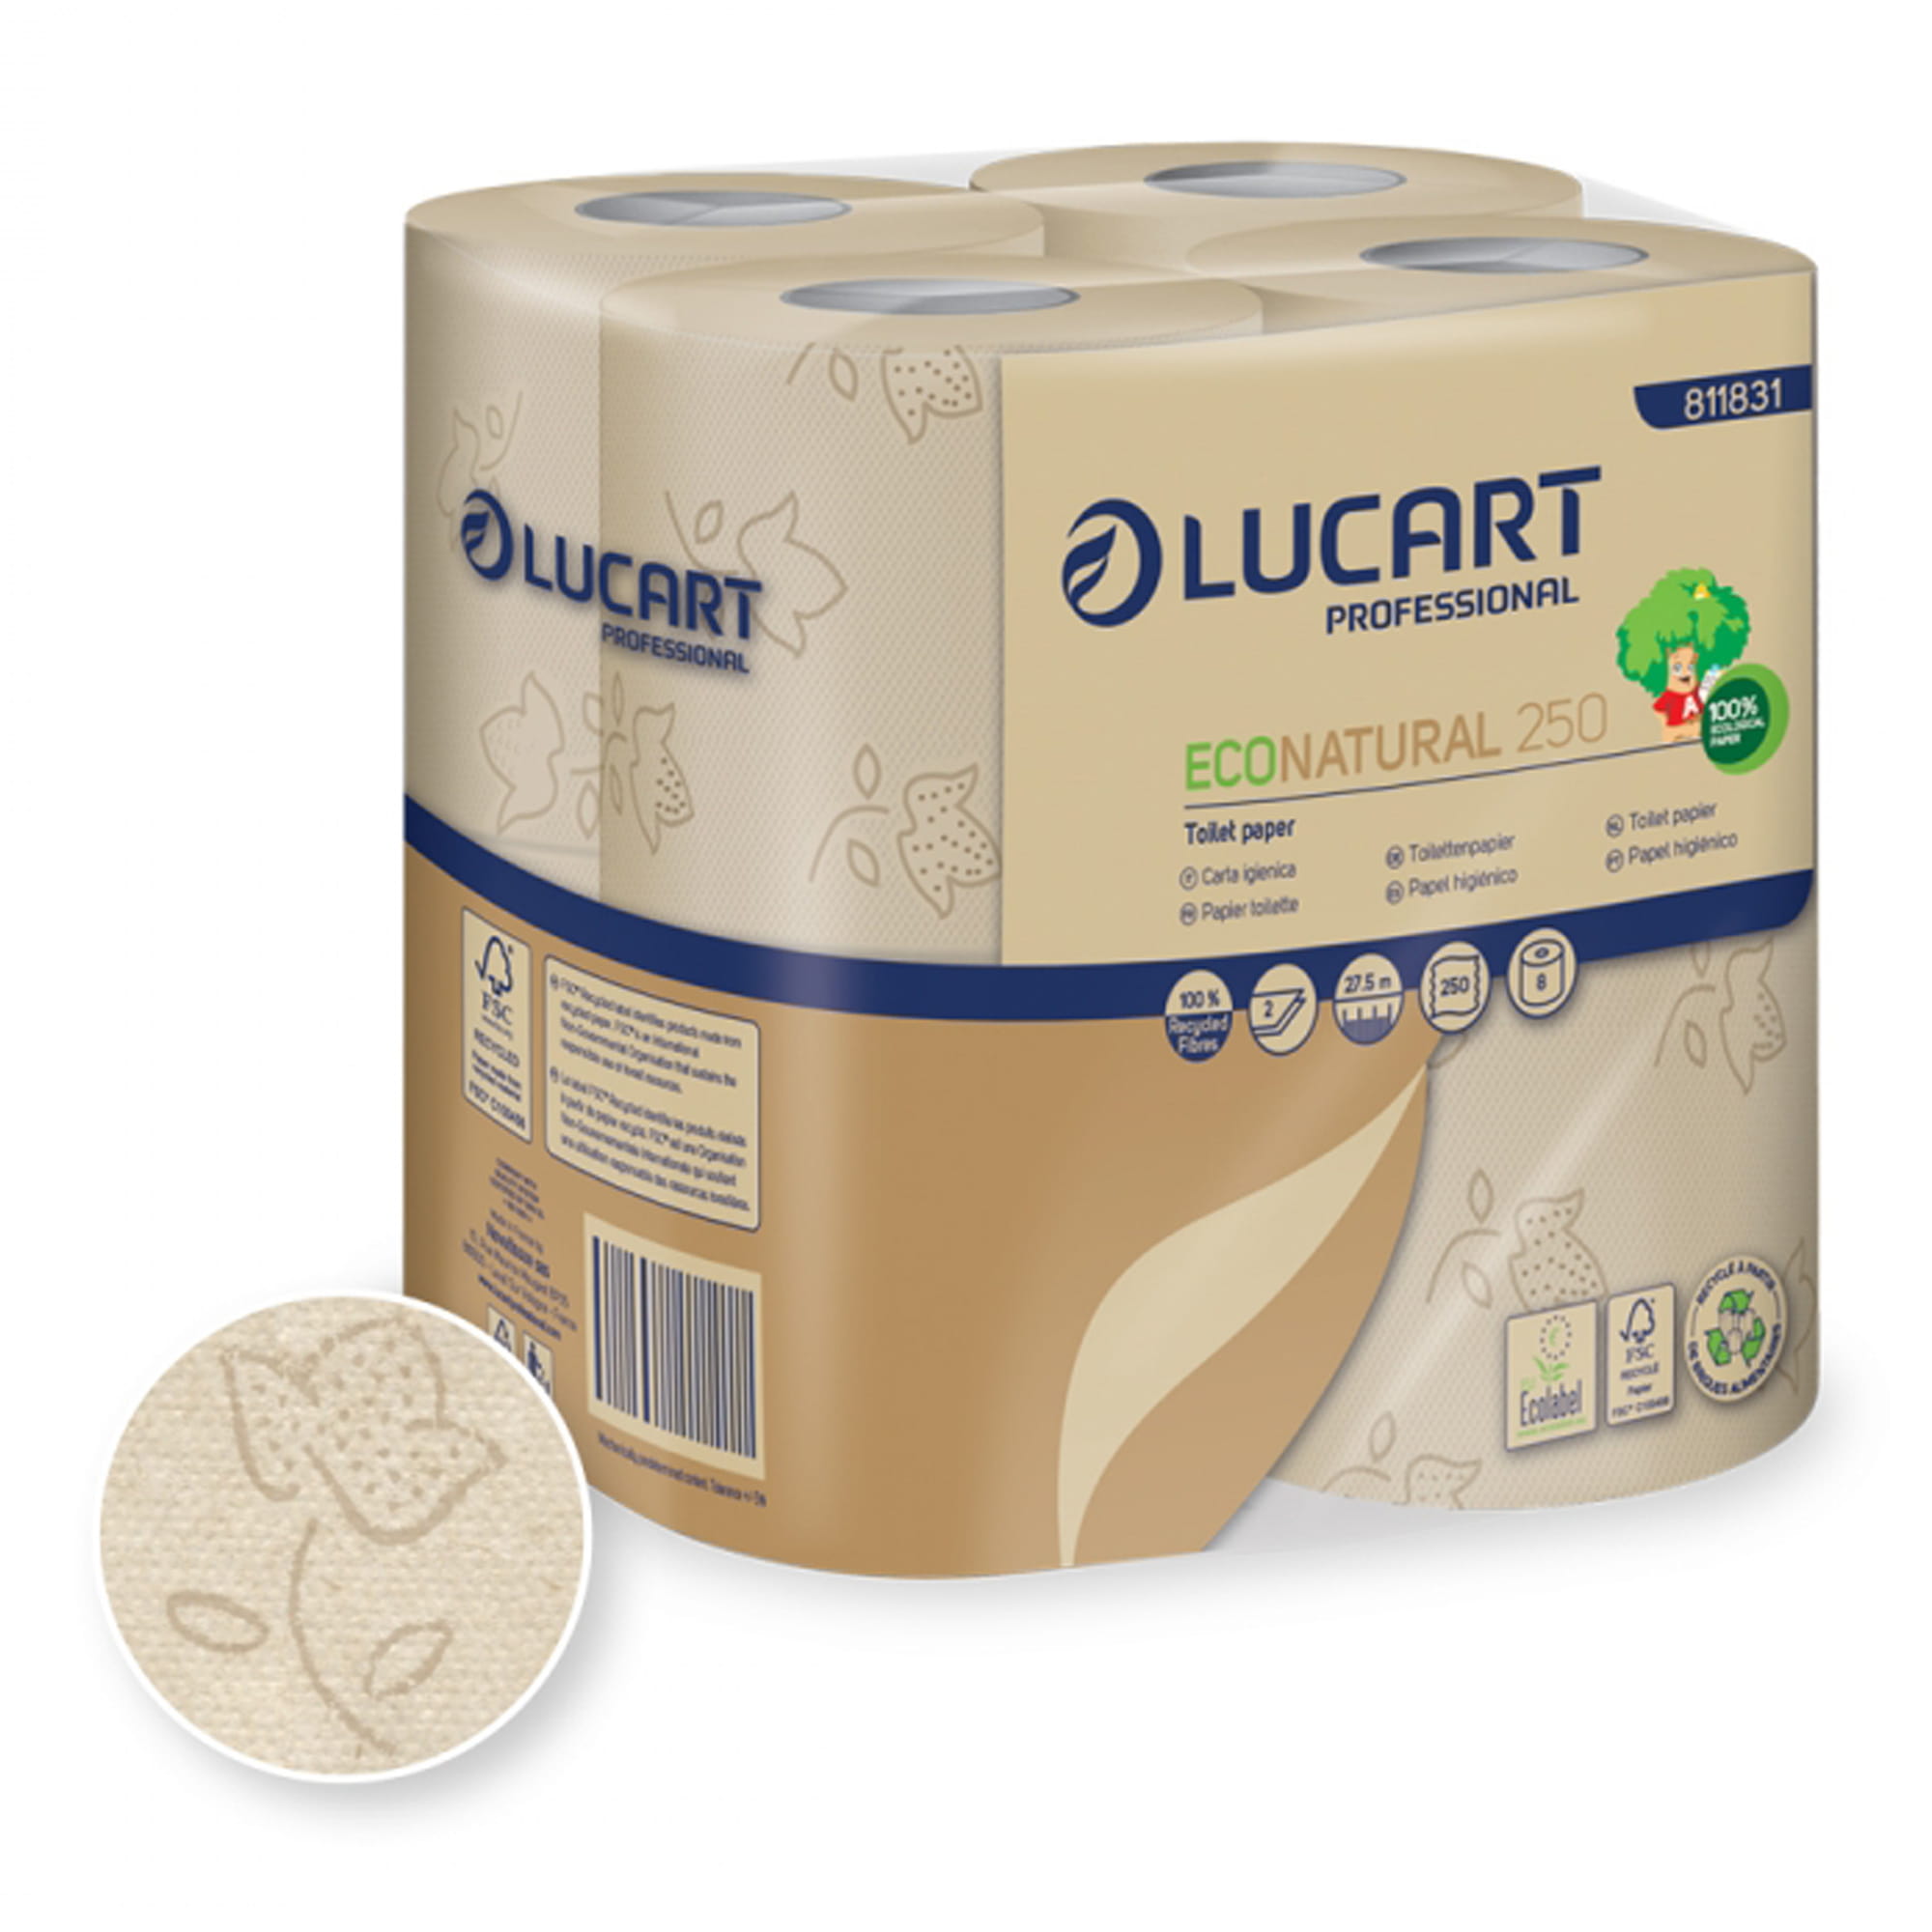 Lucart EcoNatural 250 Toilettenpapier Kleinrolle 2-lagig, 250 Blatt 64 Rollen 811831_1